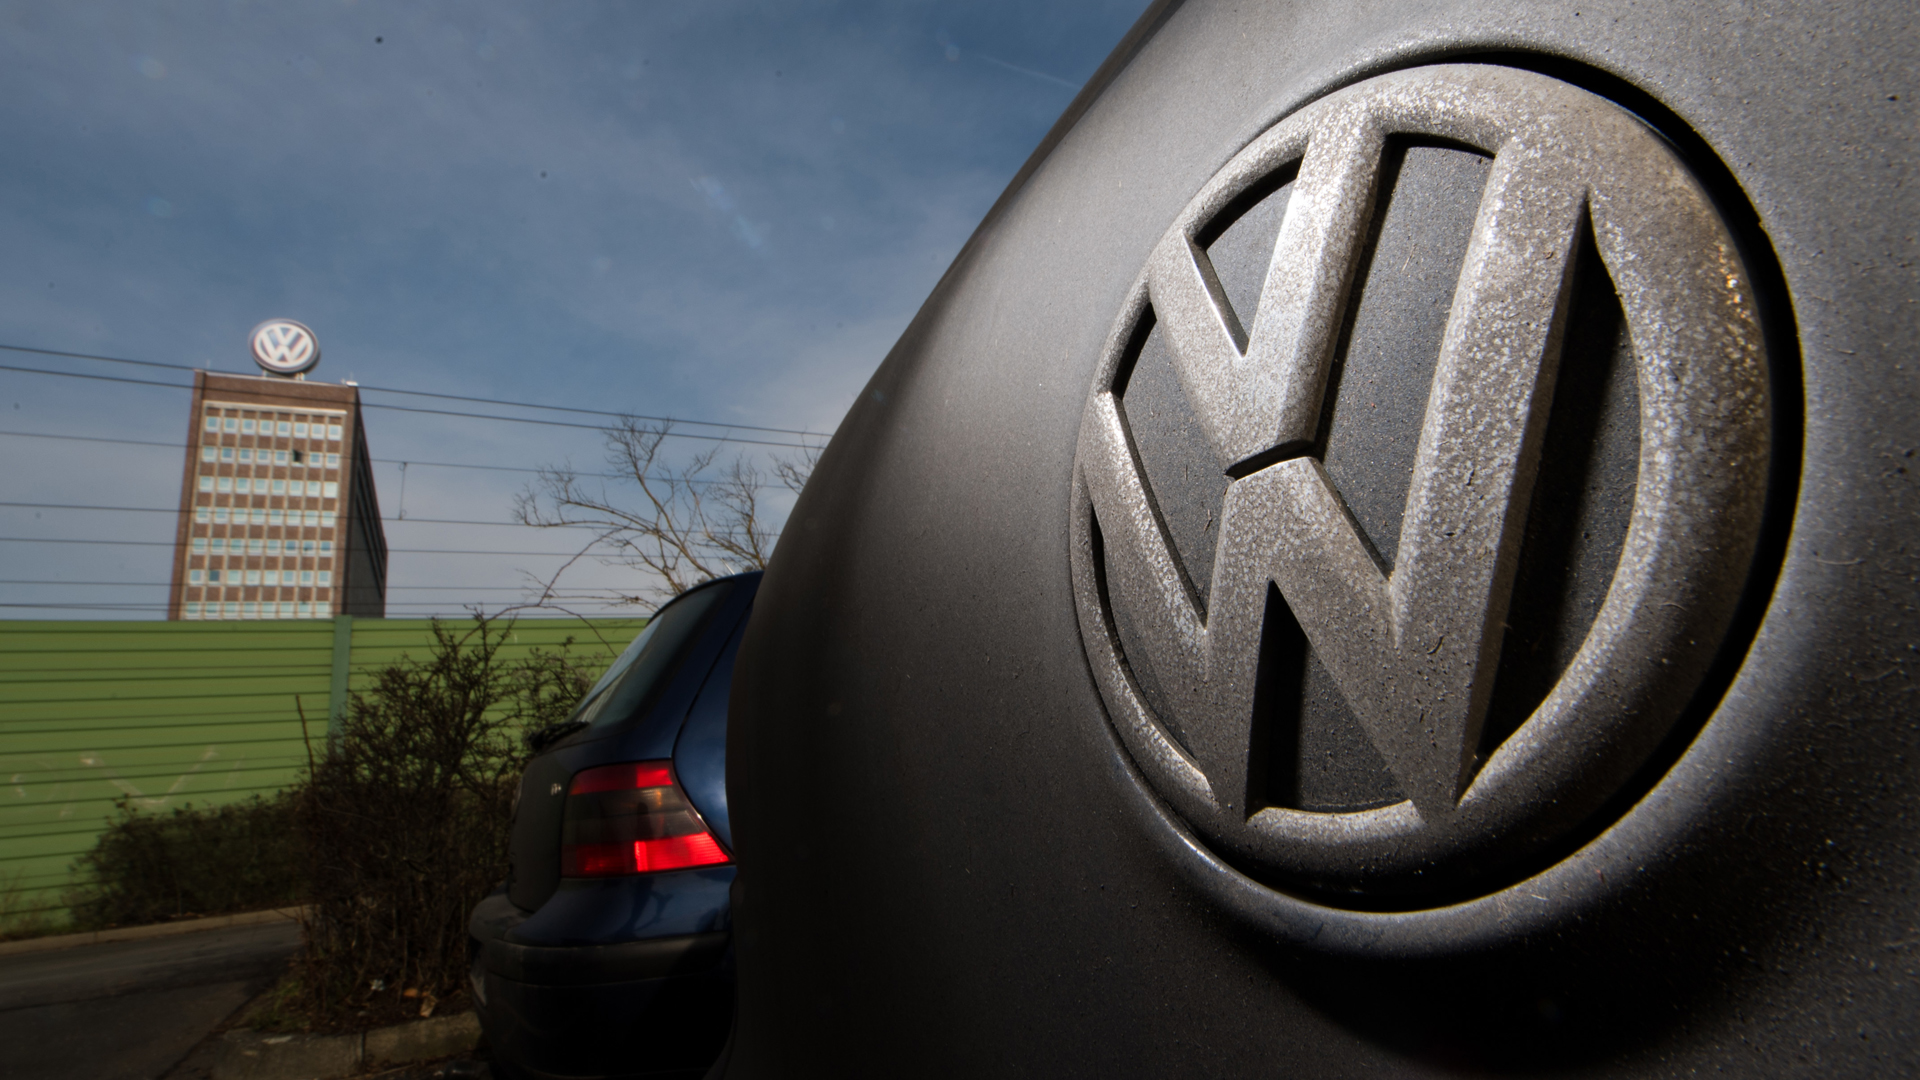 Verdrecktes VW-Logo an einem Golf | picture alliance / Julian Strate